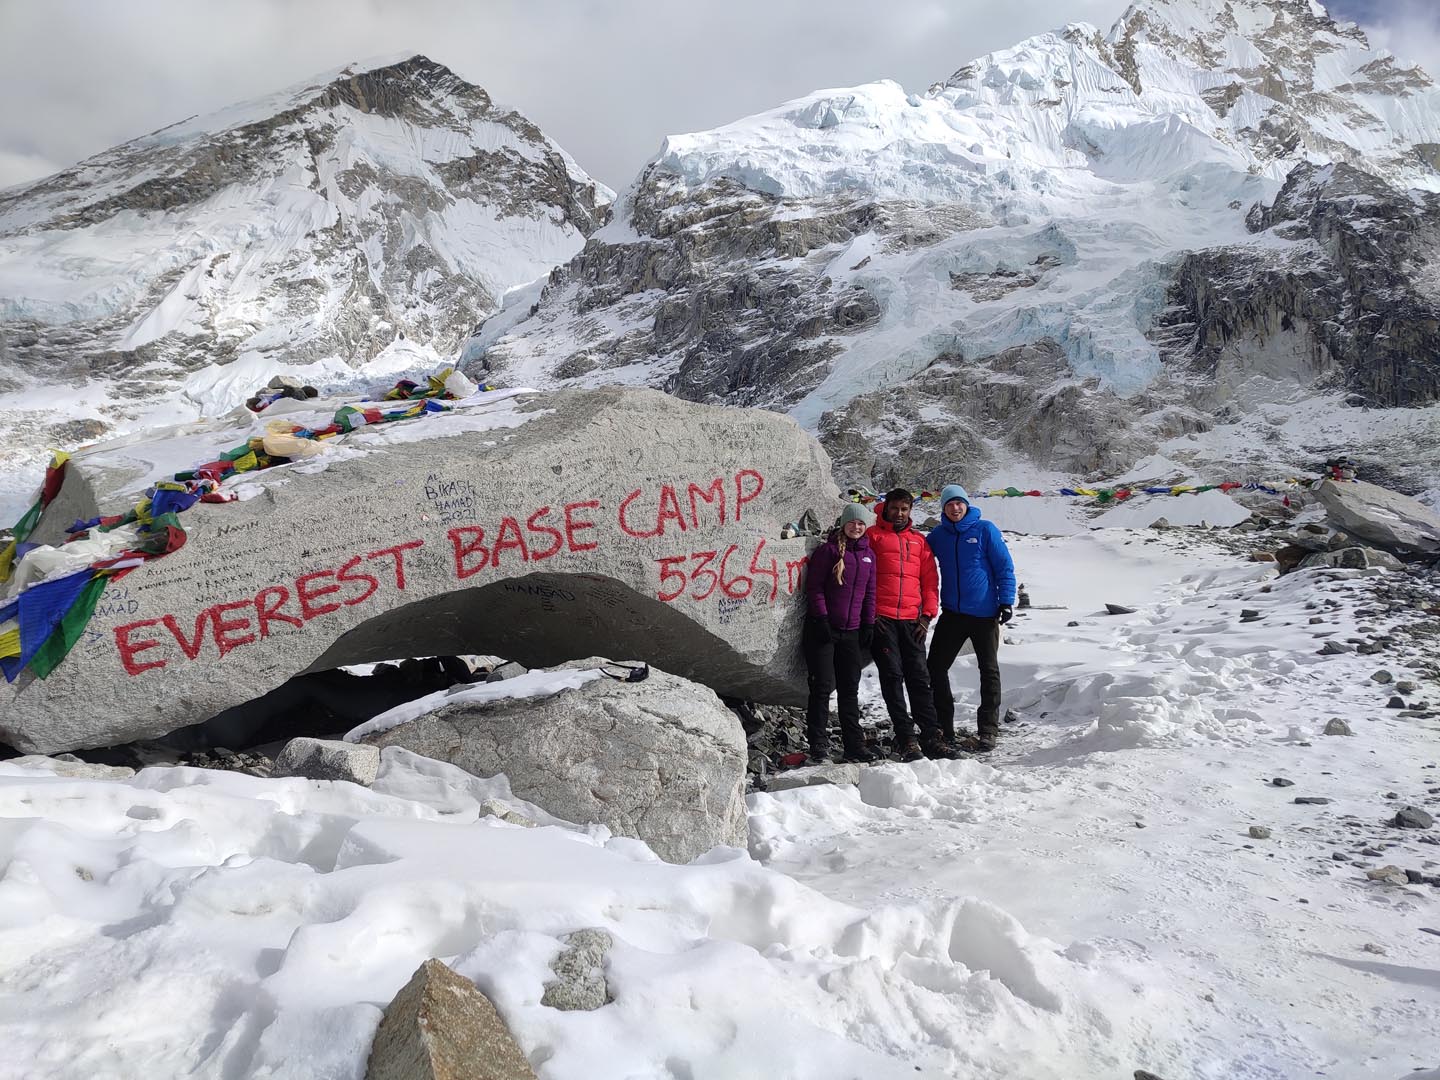 Everest Base Camp-5364m!!